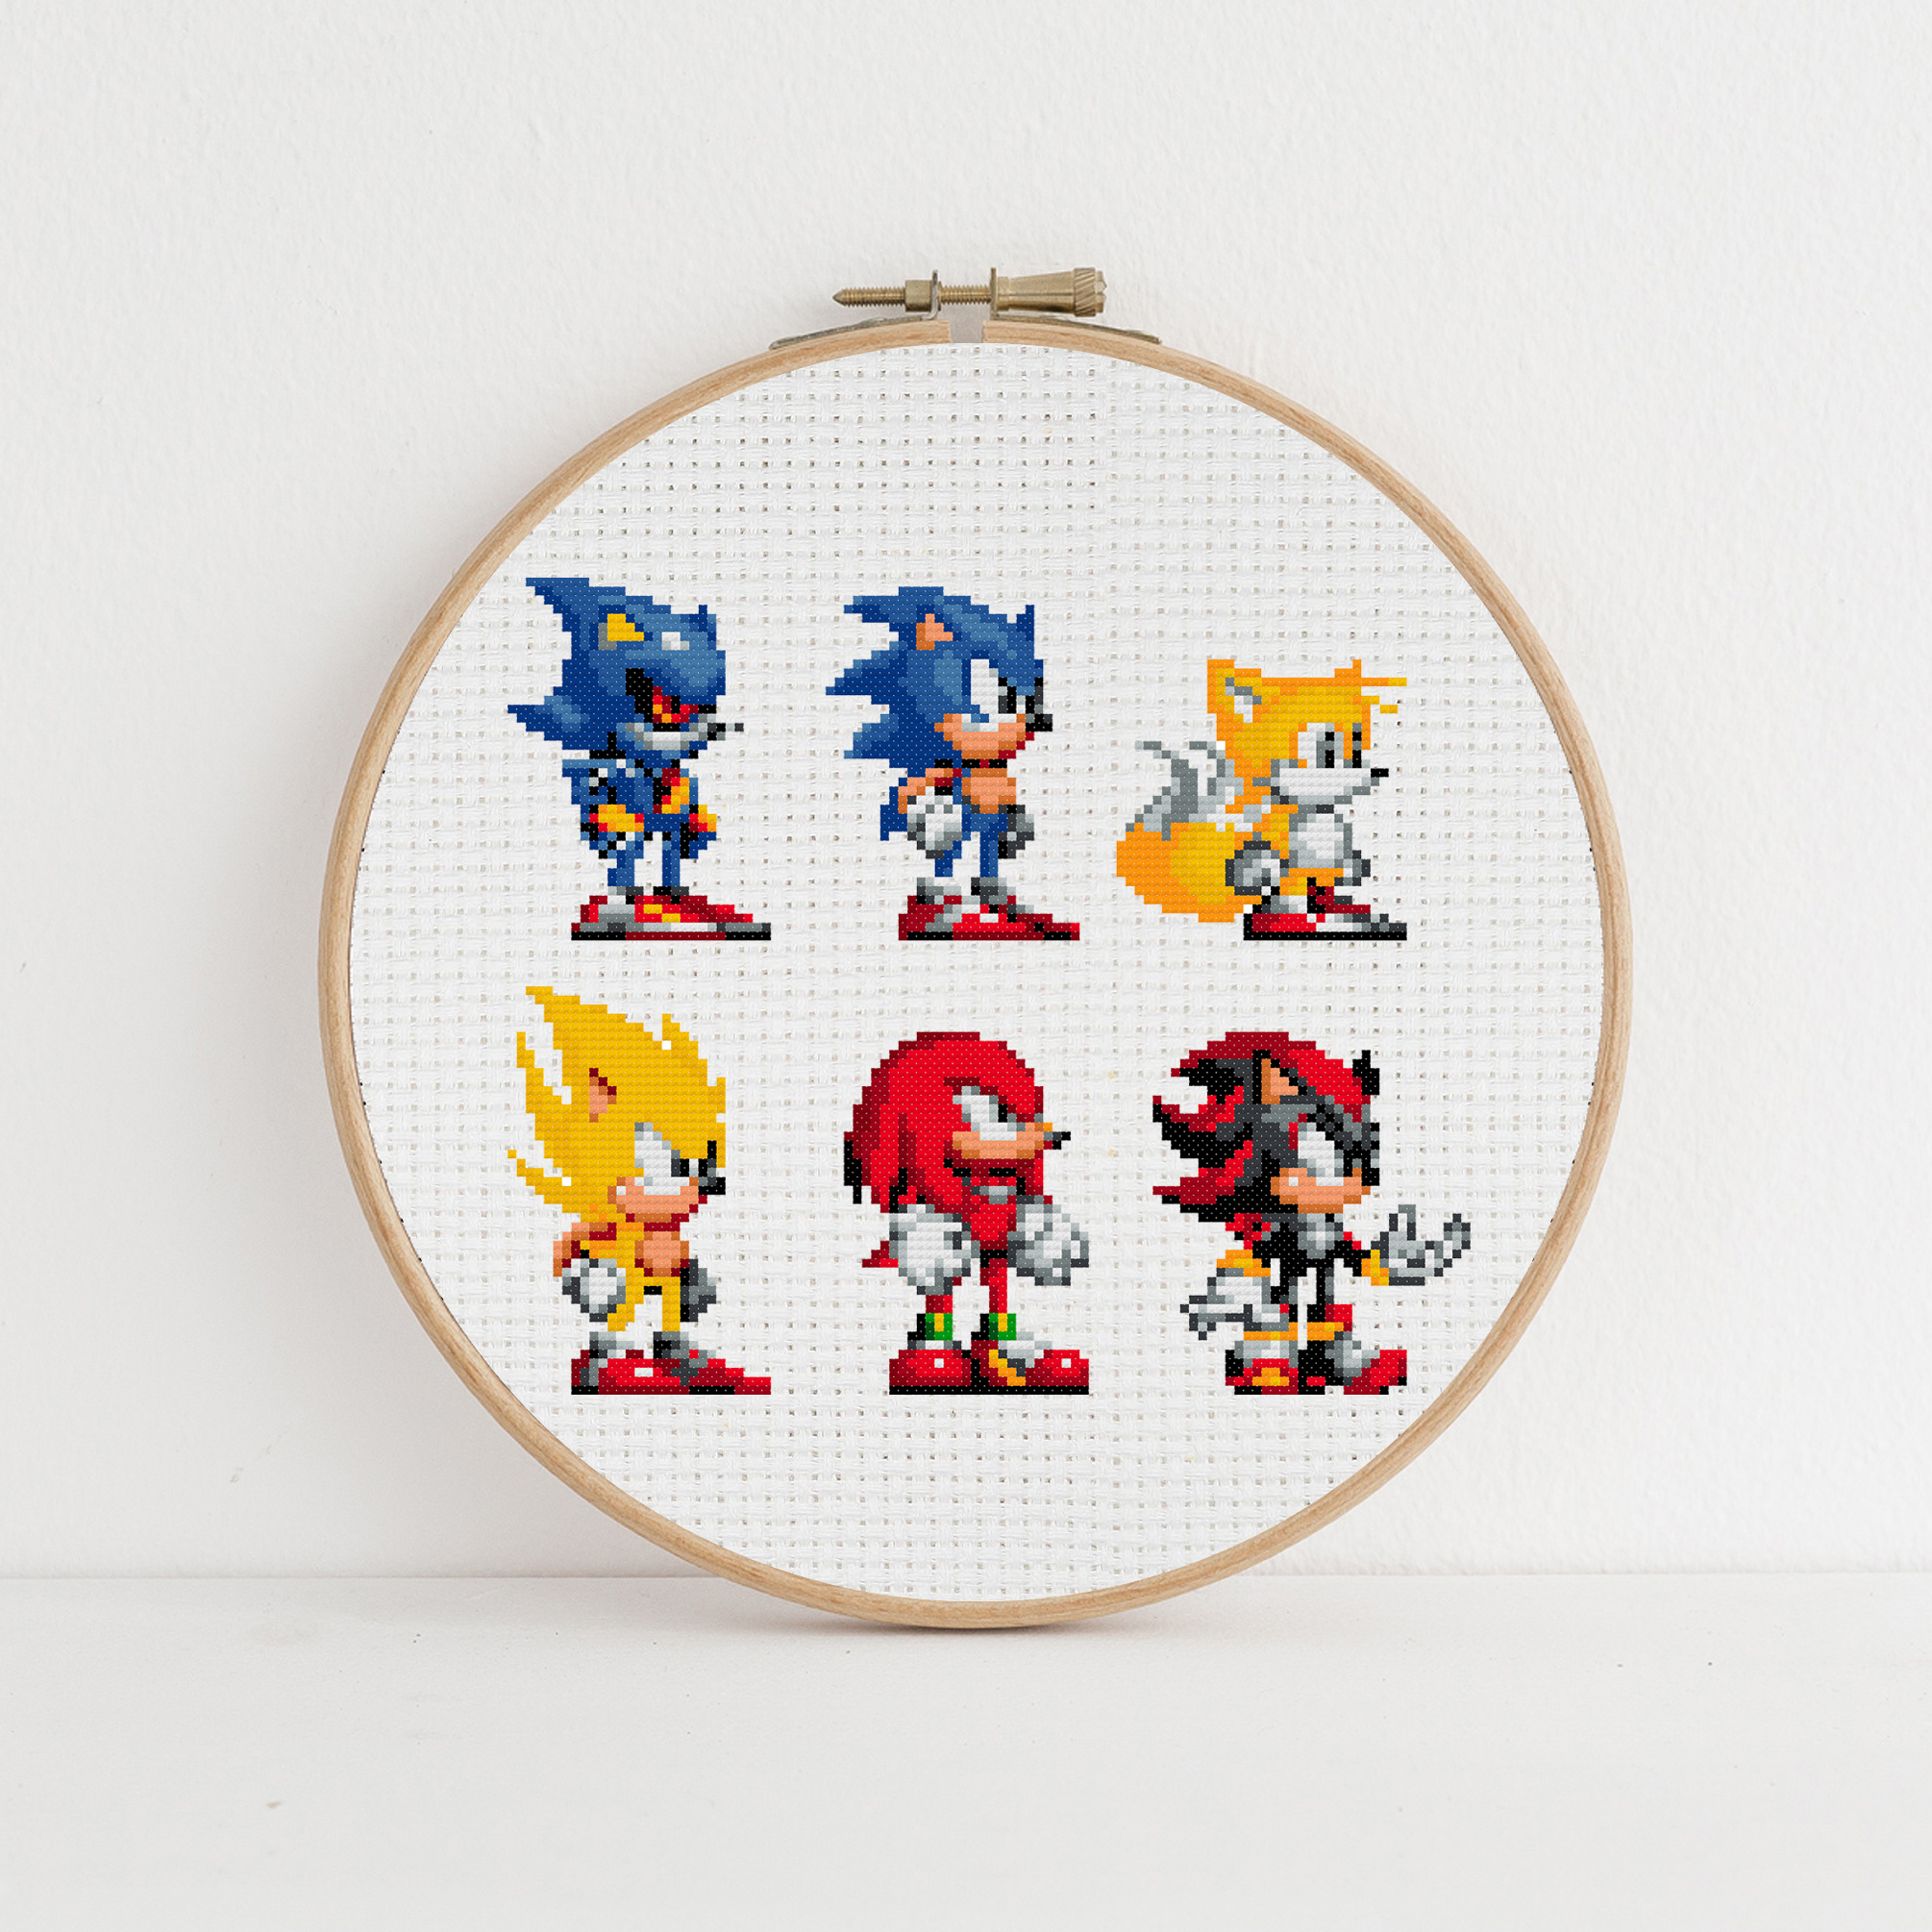 Sonic cross stitch. Sonic characters cross stitch pattern